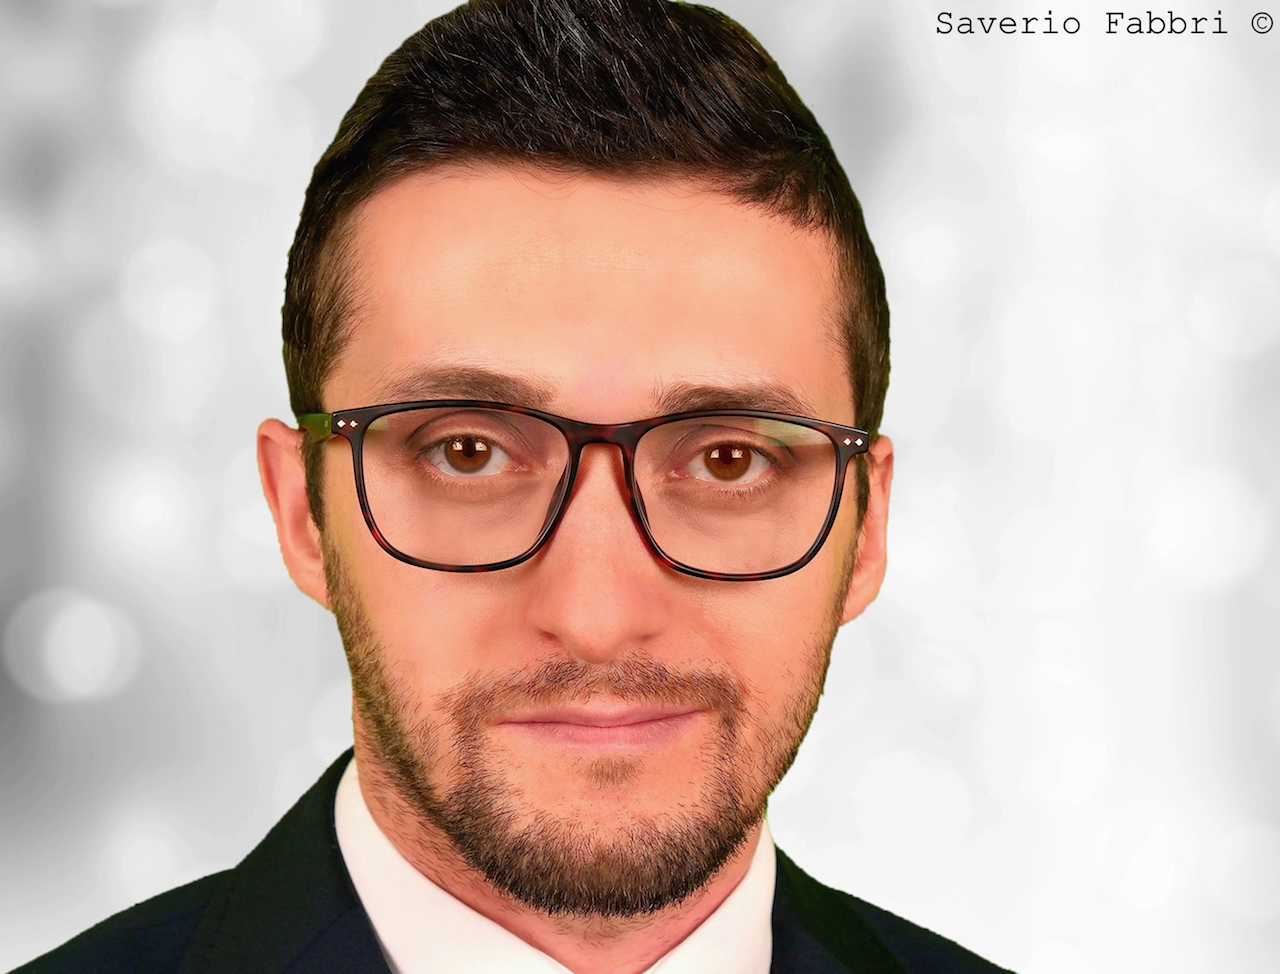 Agencja Gudejko: Saverio Fabbri